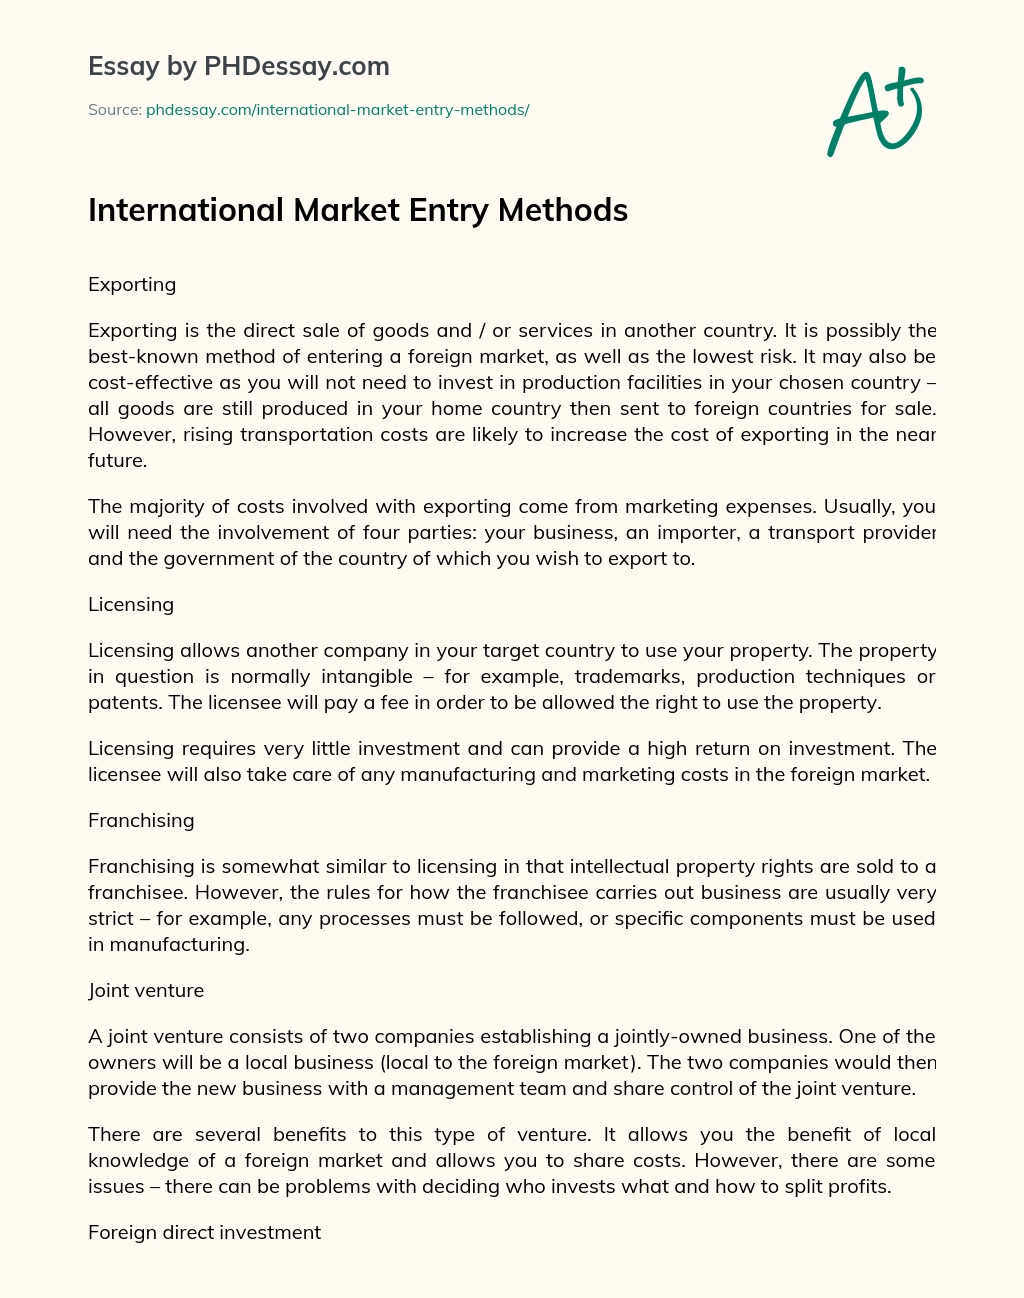 International Market Entry Methods essay